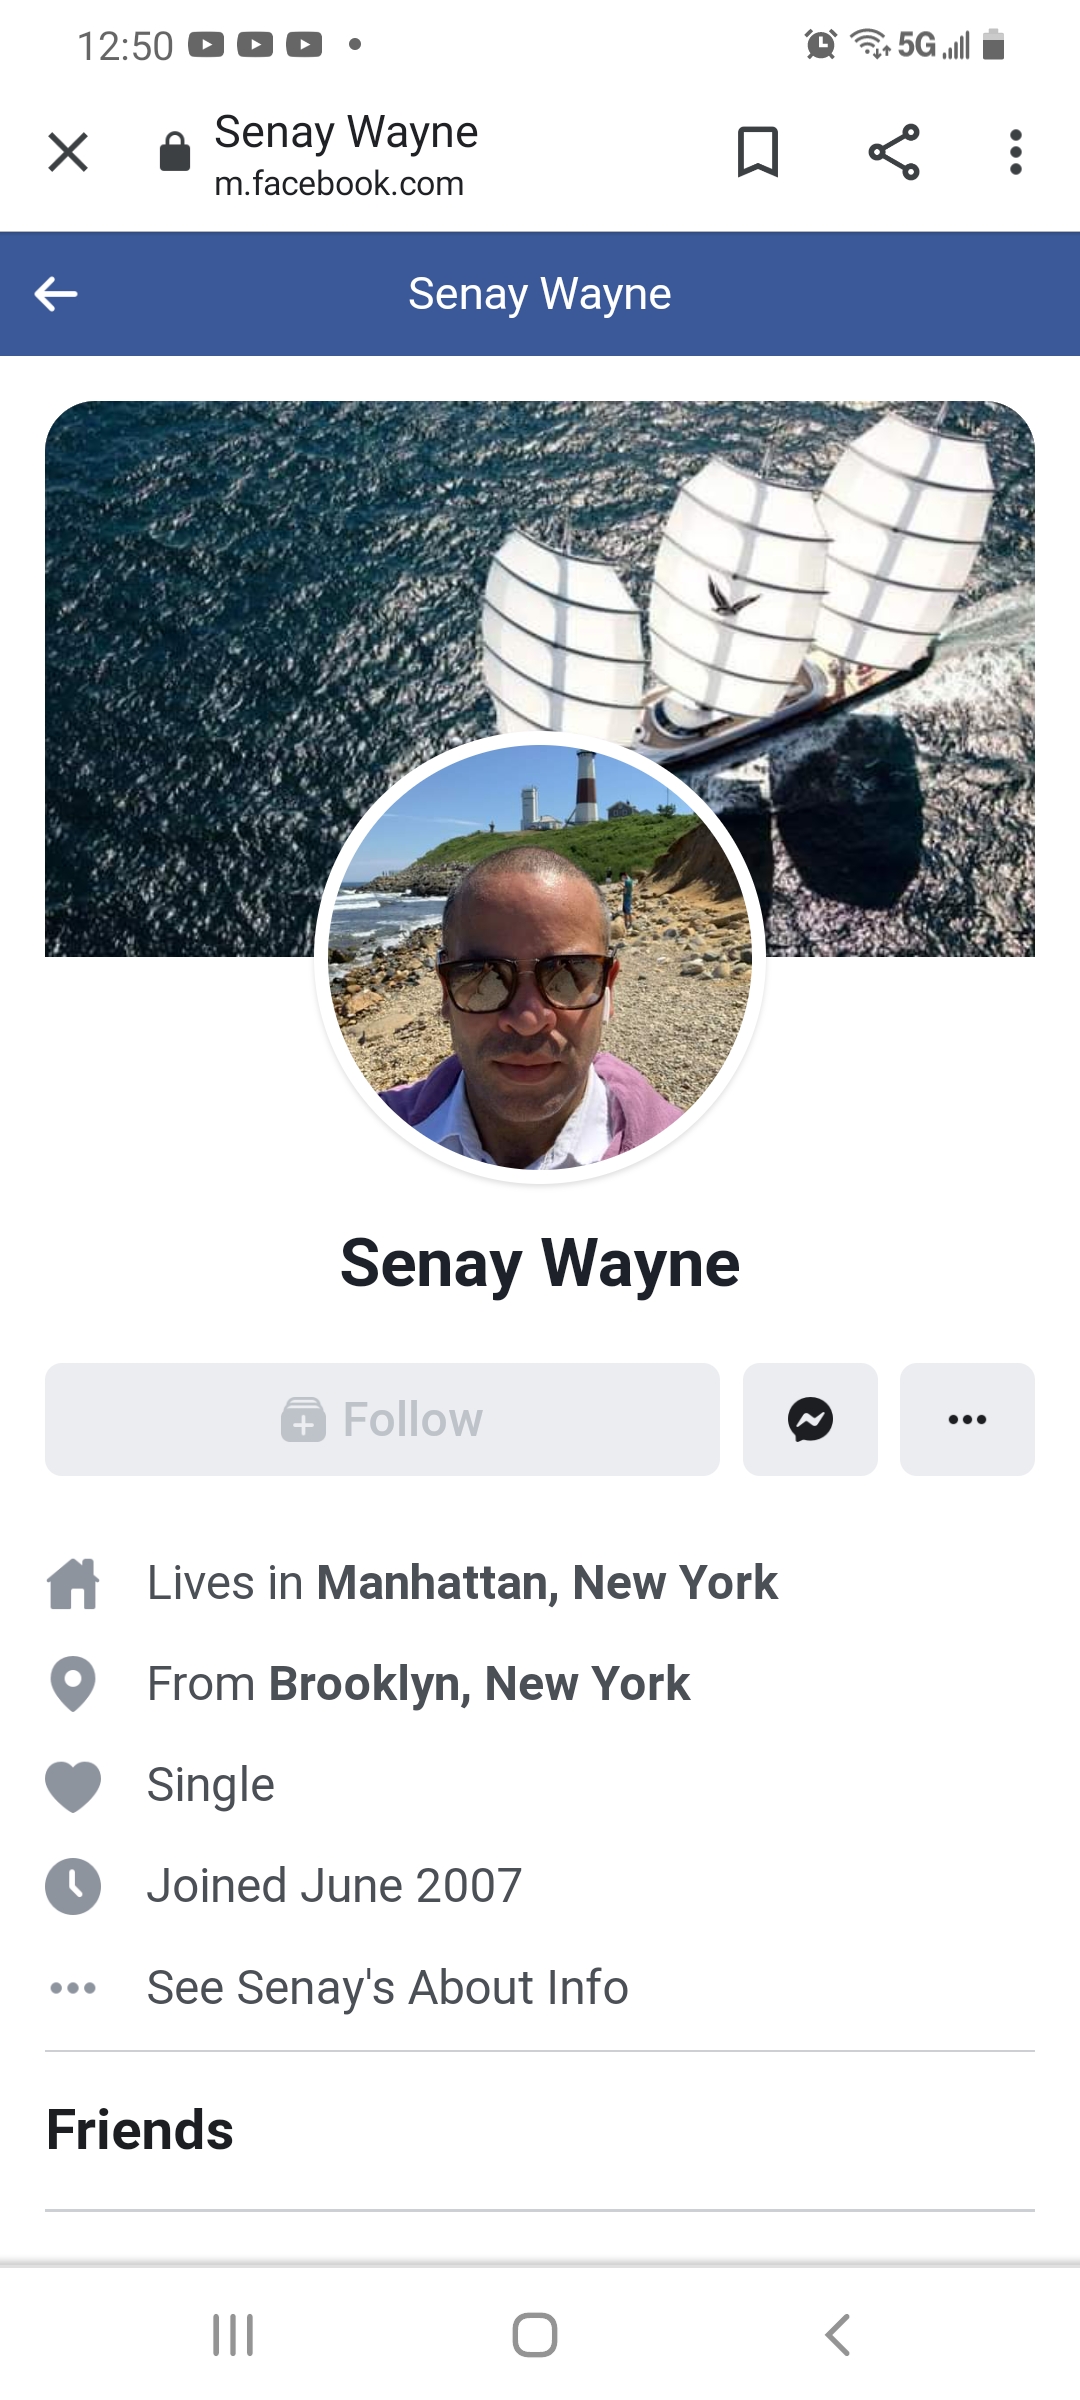 Senay Wayne's FB page